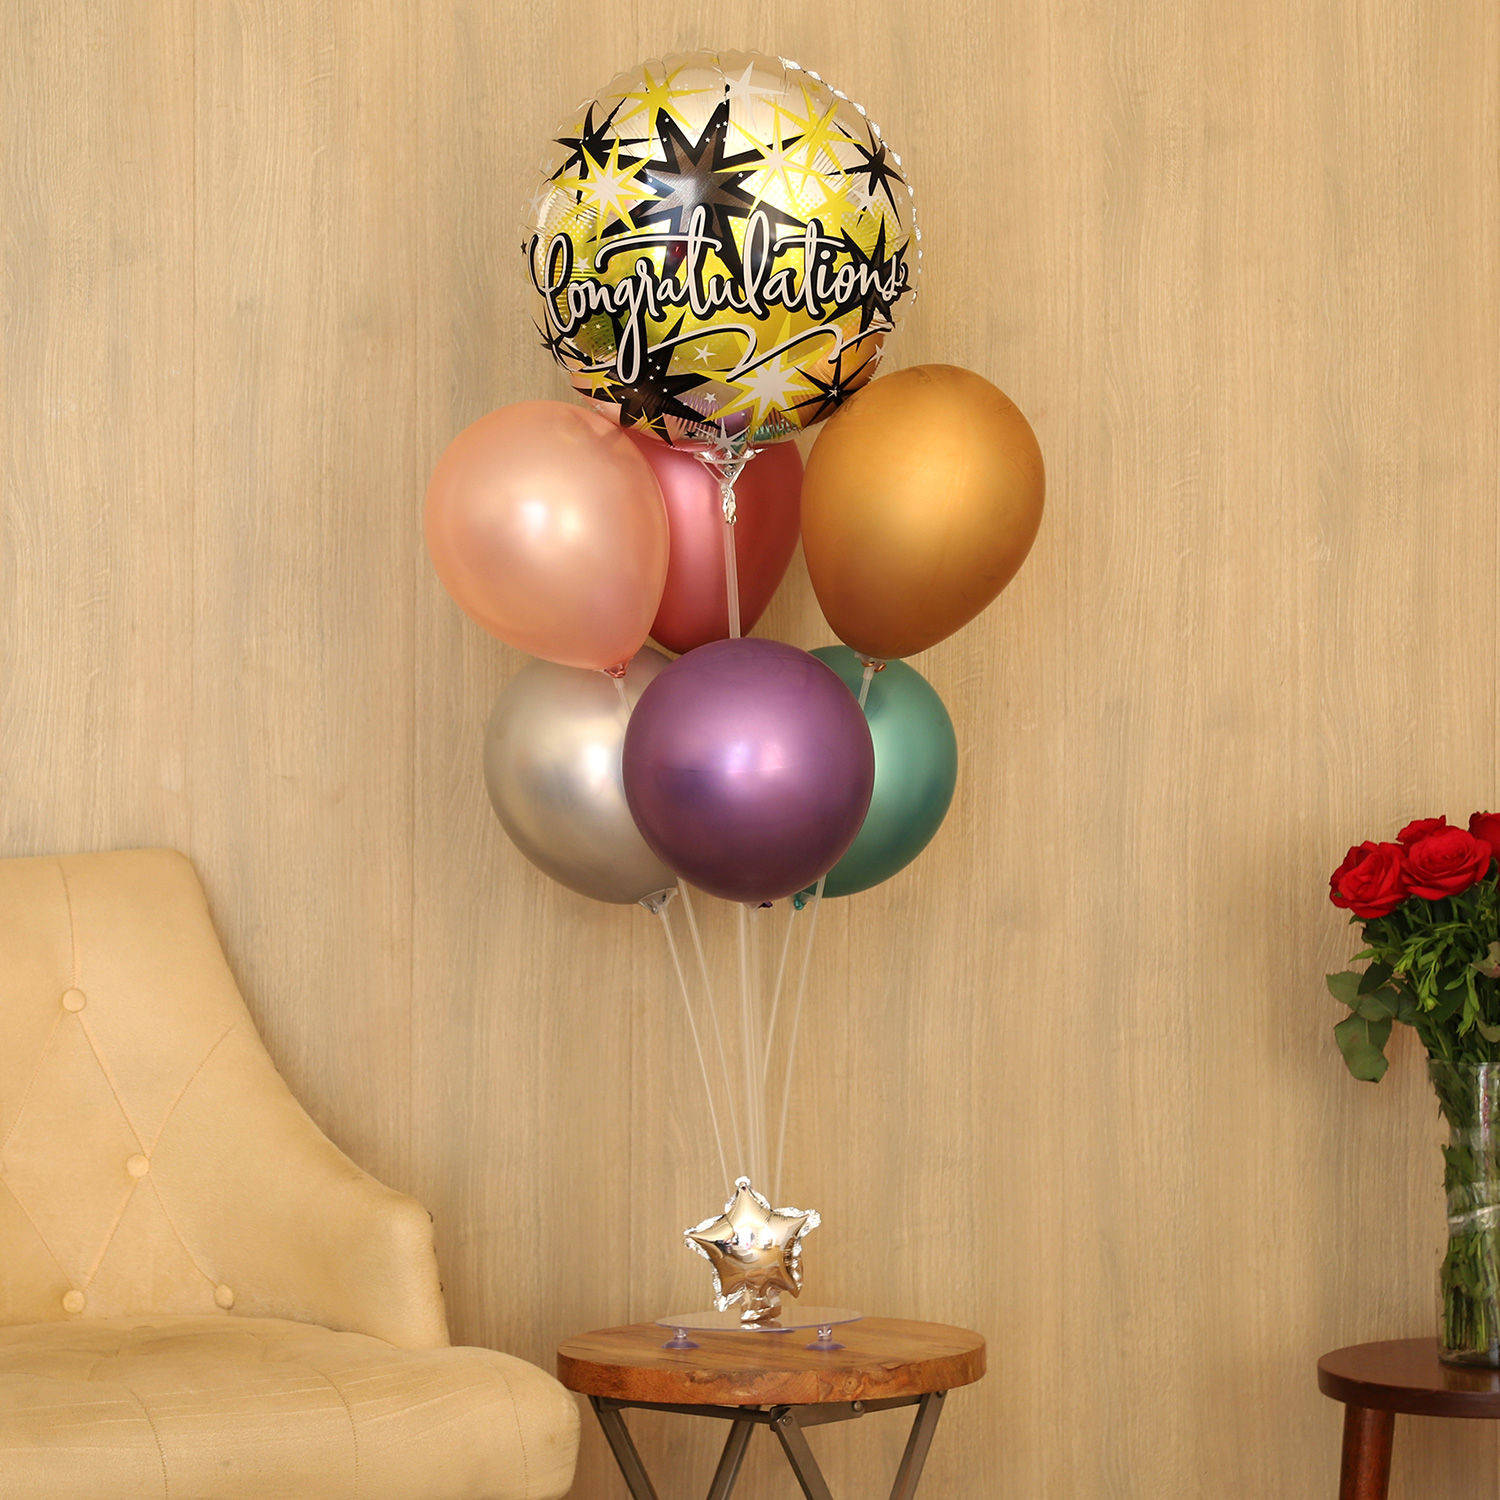 Buy/Send Congratulations Balloon Bouquets Online- FNP